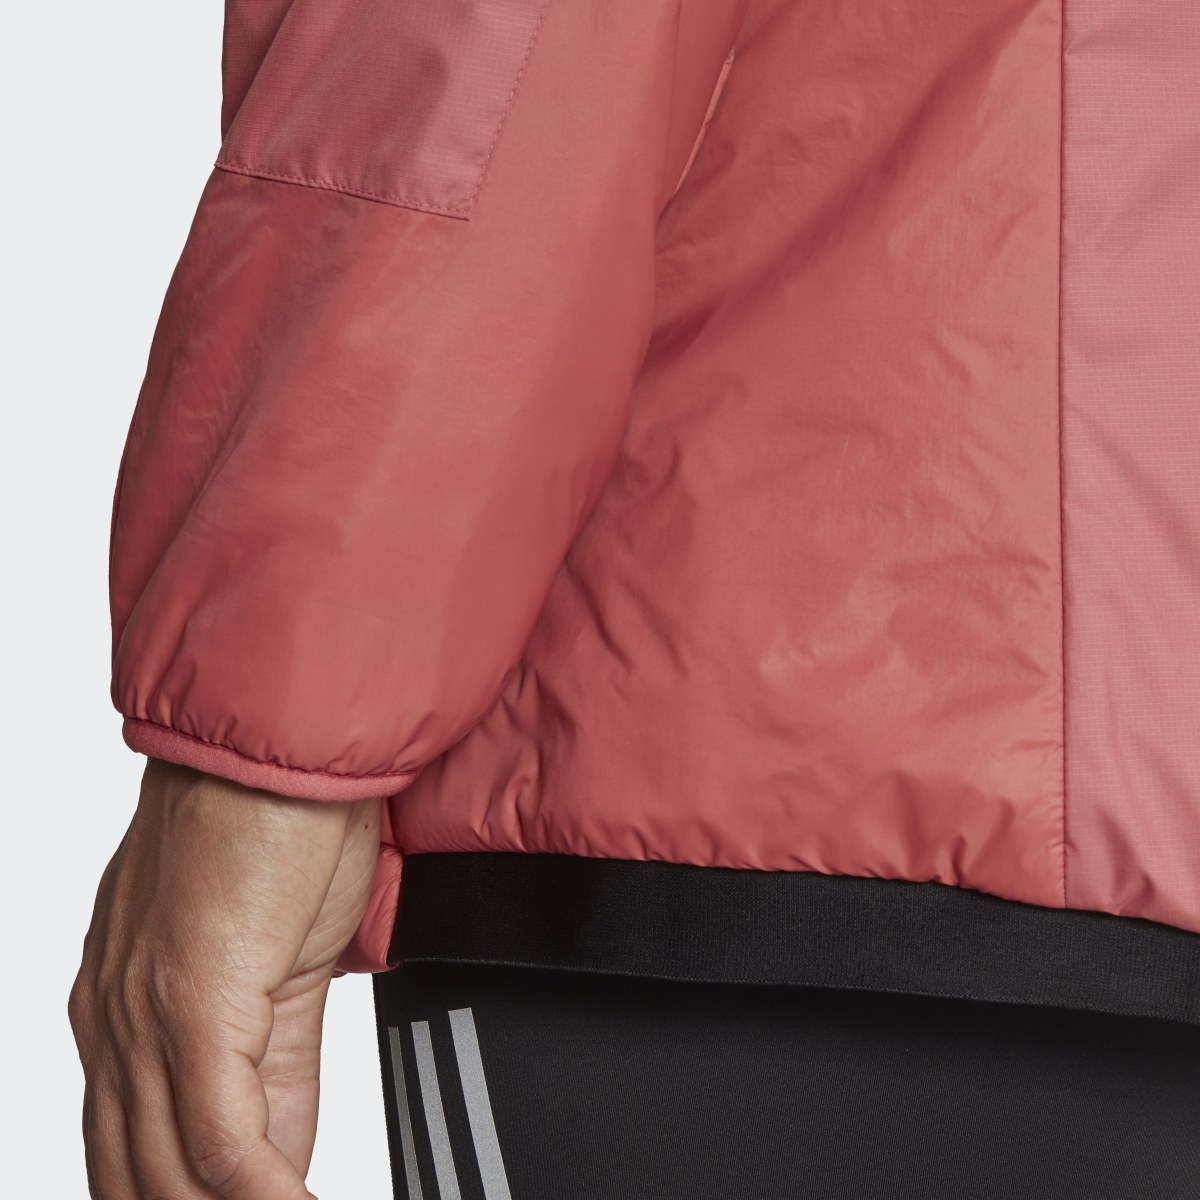 Adidas Terrex Multi Insulated Jacket (Plus Size). 7